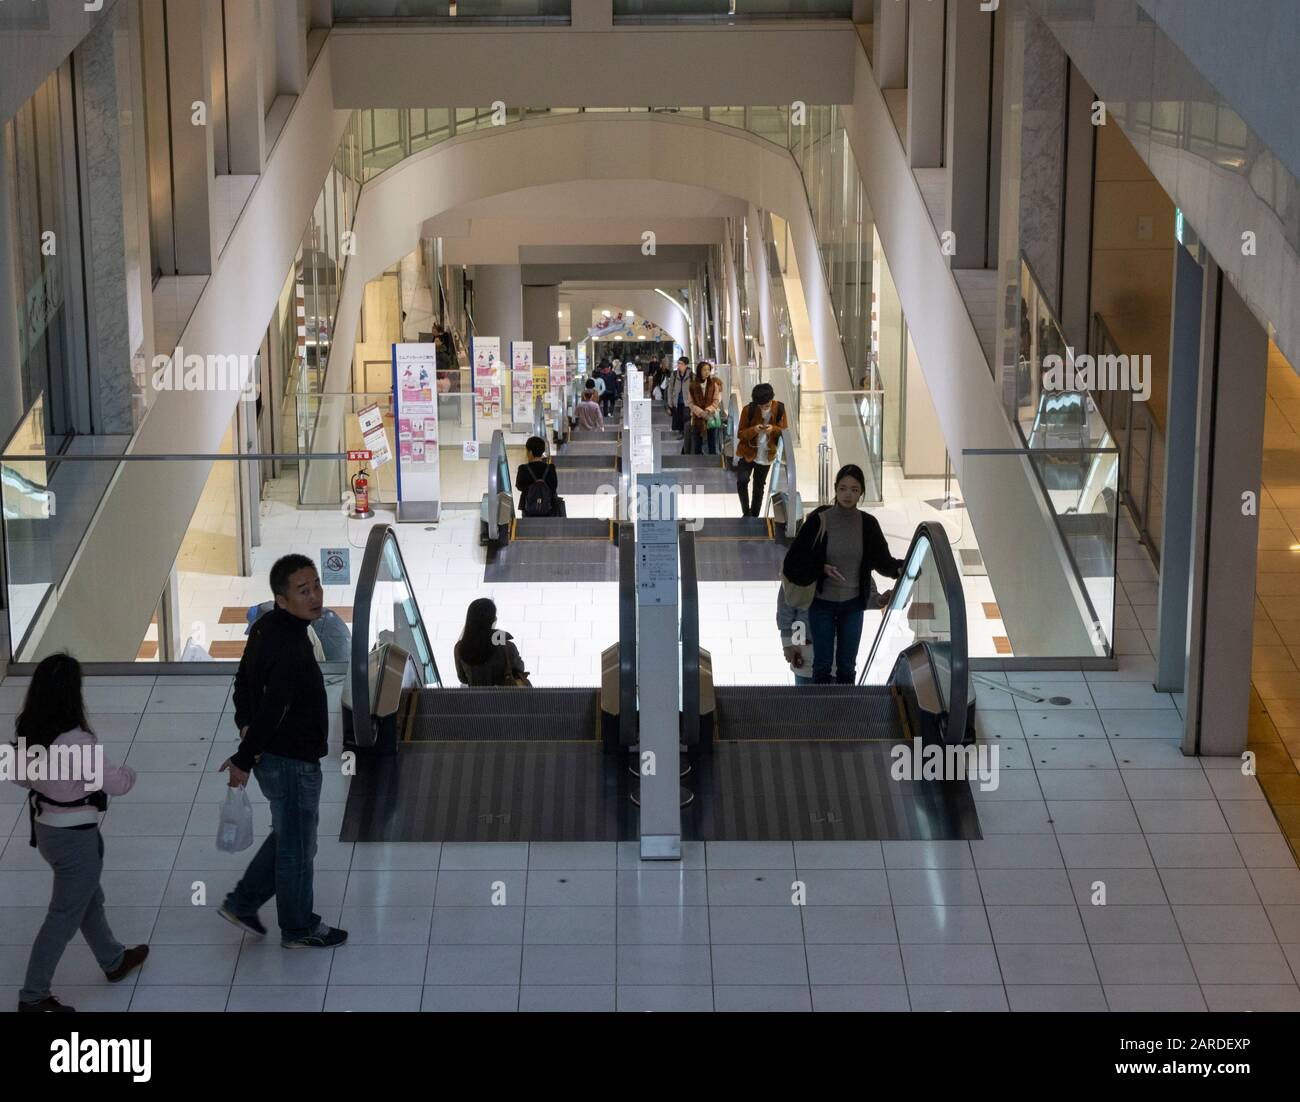 escalators at Isetan department store, Kyoto Station, Kyoto, Japan Stock Photo